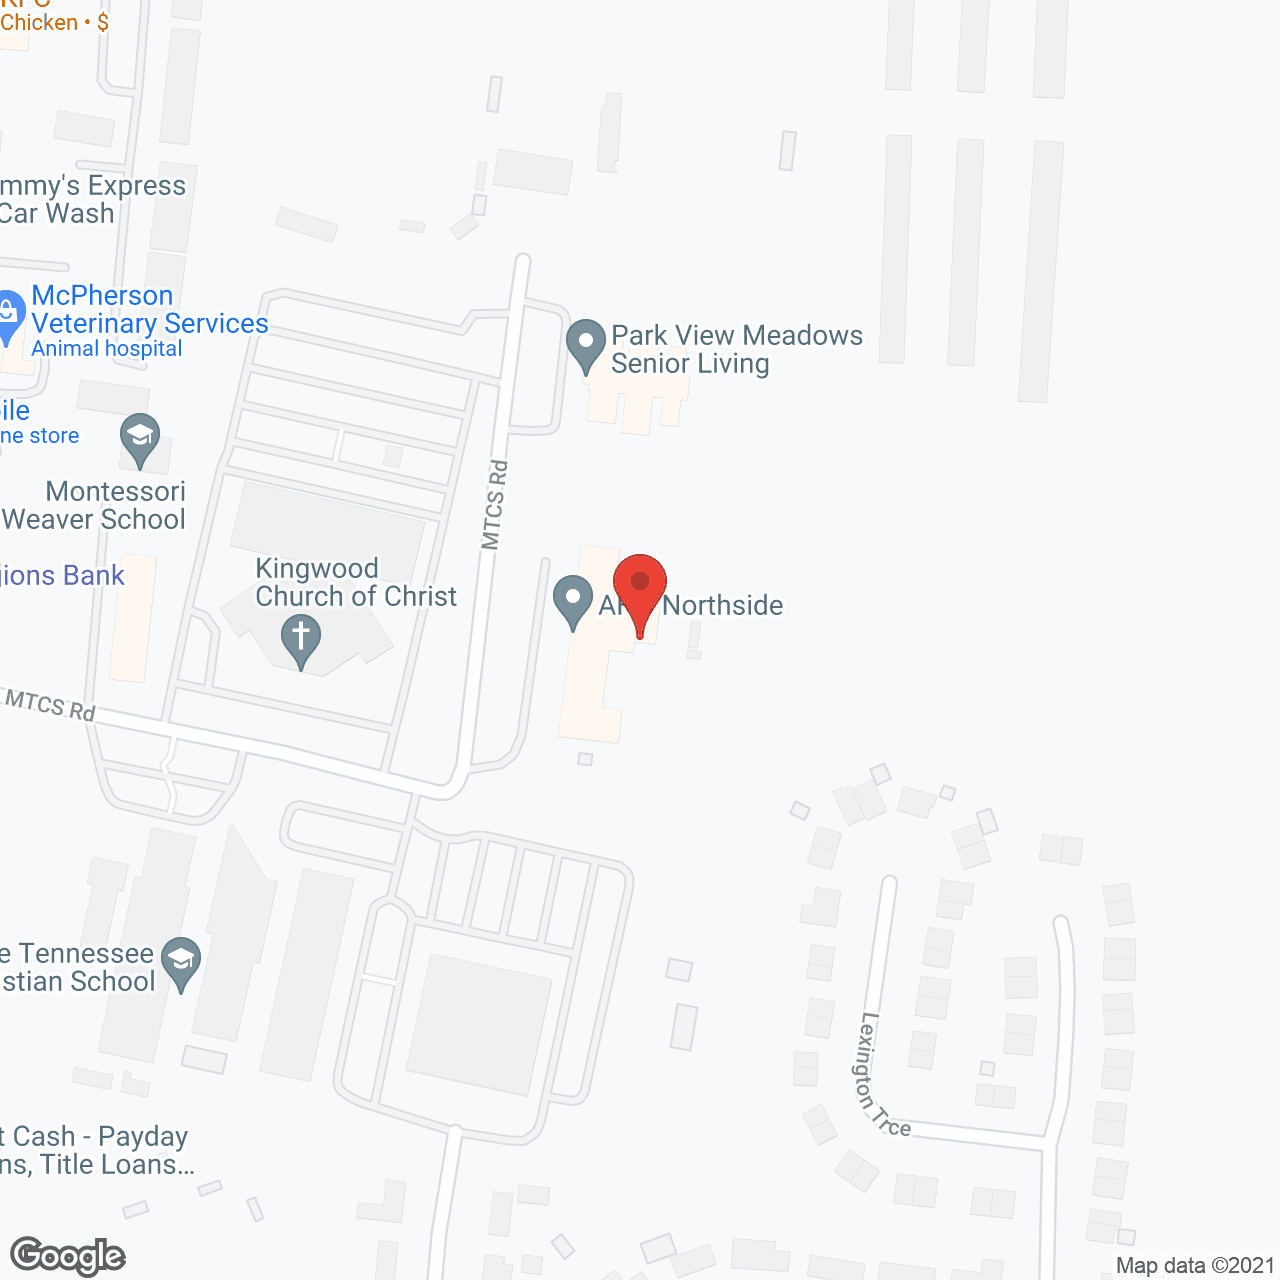 Northside Health Care Center in google map